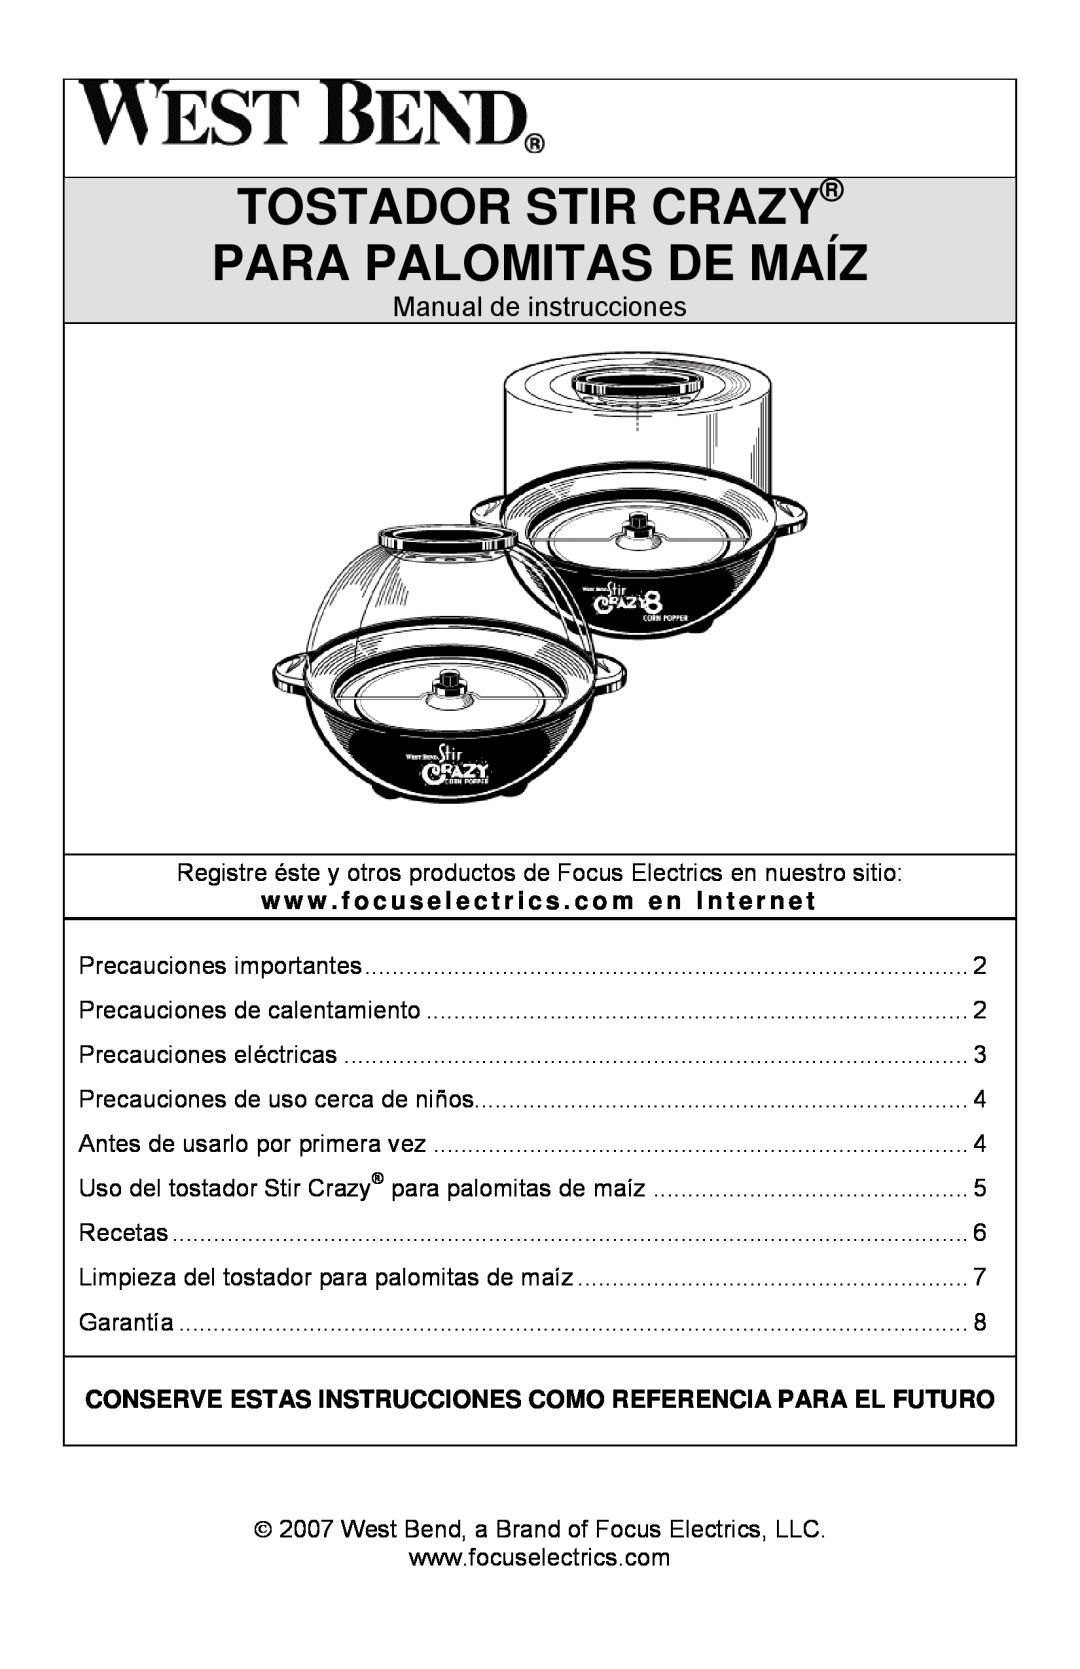 West Bend L5557B, 82306 instruction manual Tostador Stir Crazy Para Palomitas De Maíz, Manual de instrucciones 